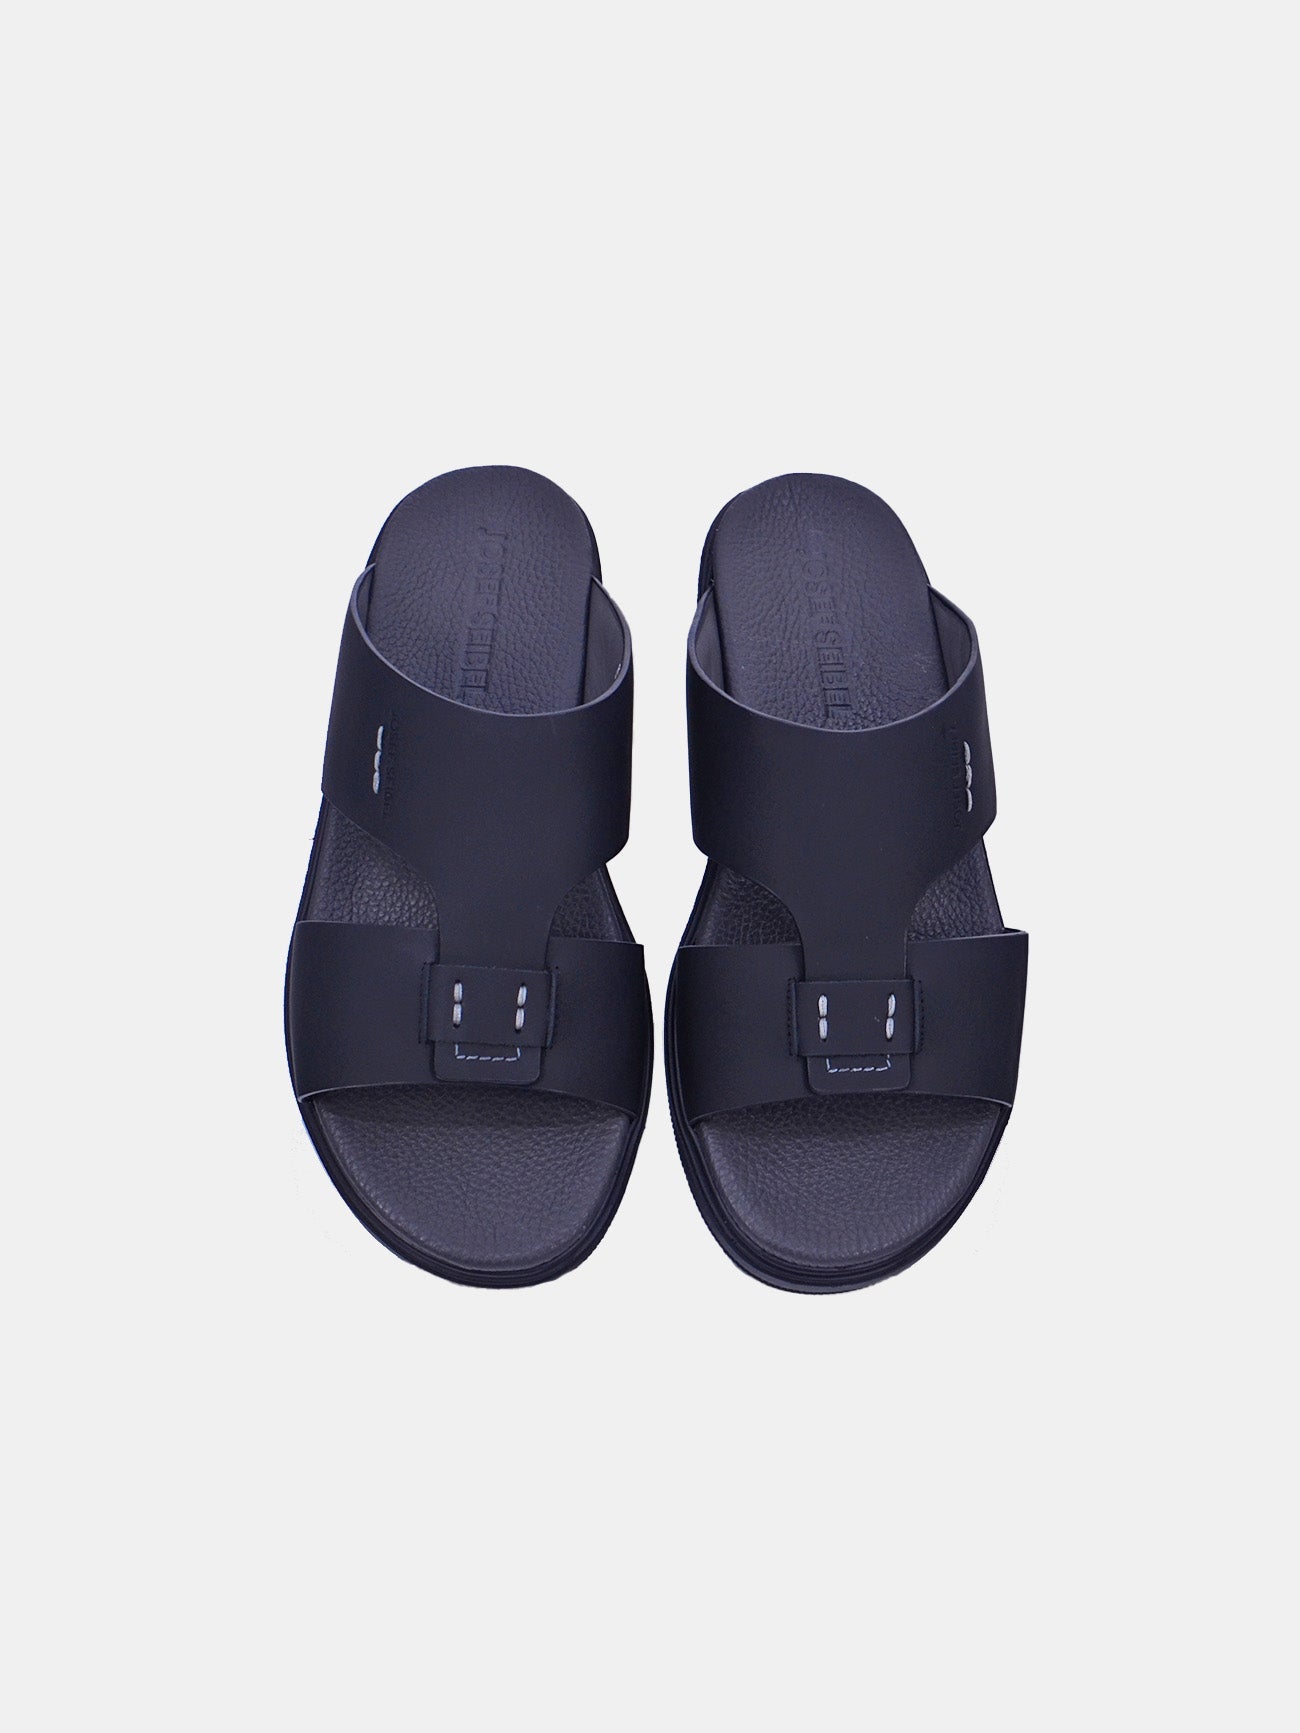 Josef Seibel JS 101 Men's Sandals #color_Black